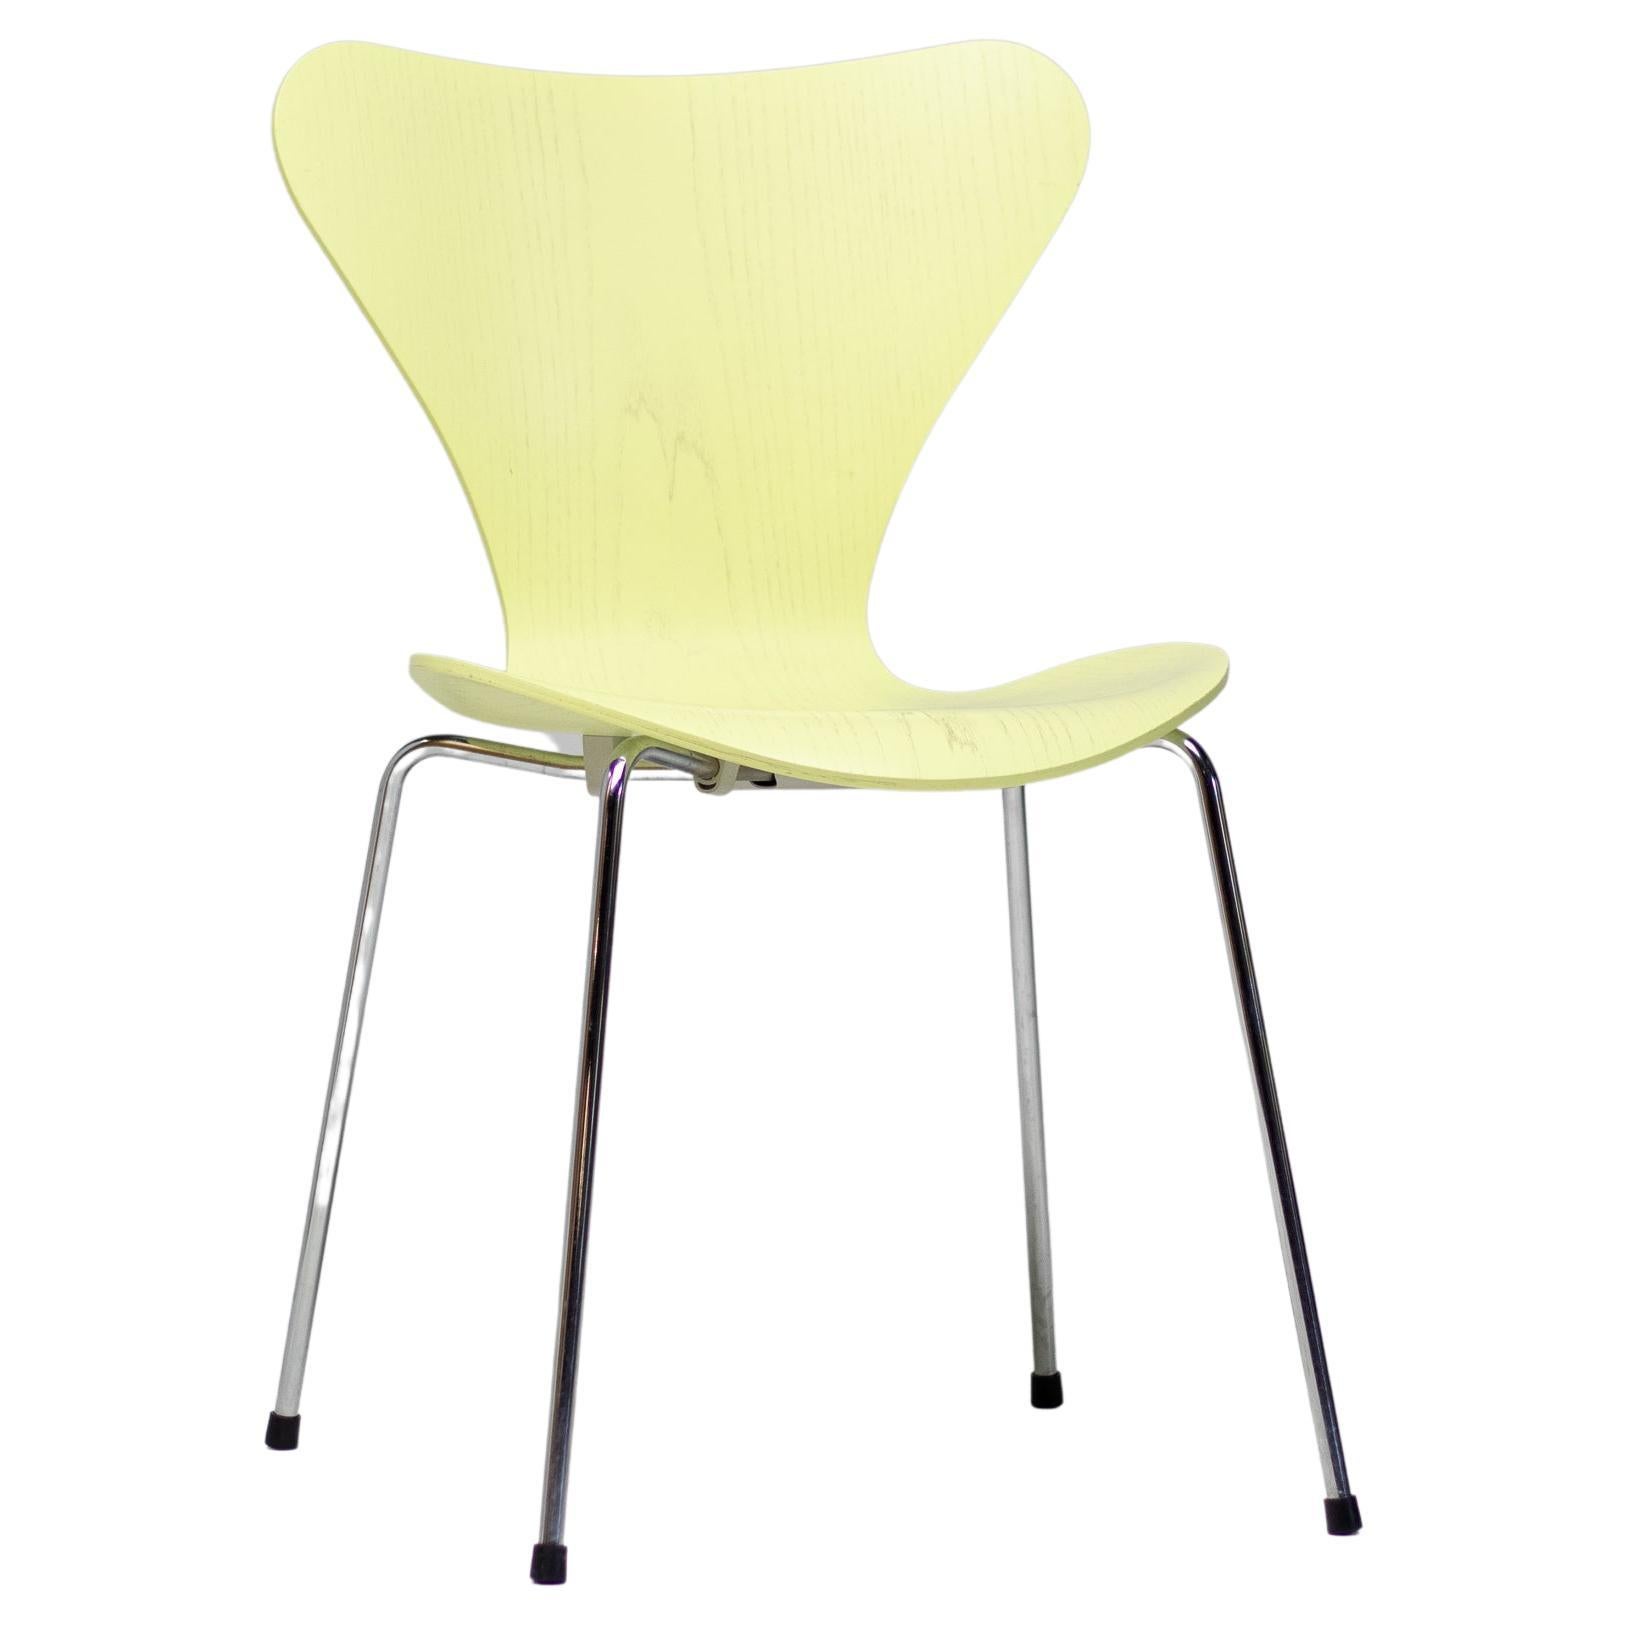 Set of Six Lemon Lime Model 3107 "Series Seven" Chairs by Arne Jacobsen